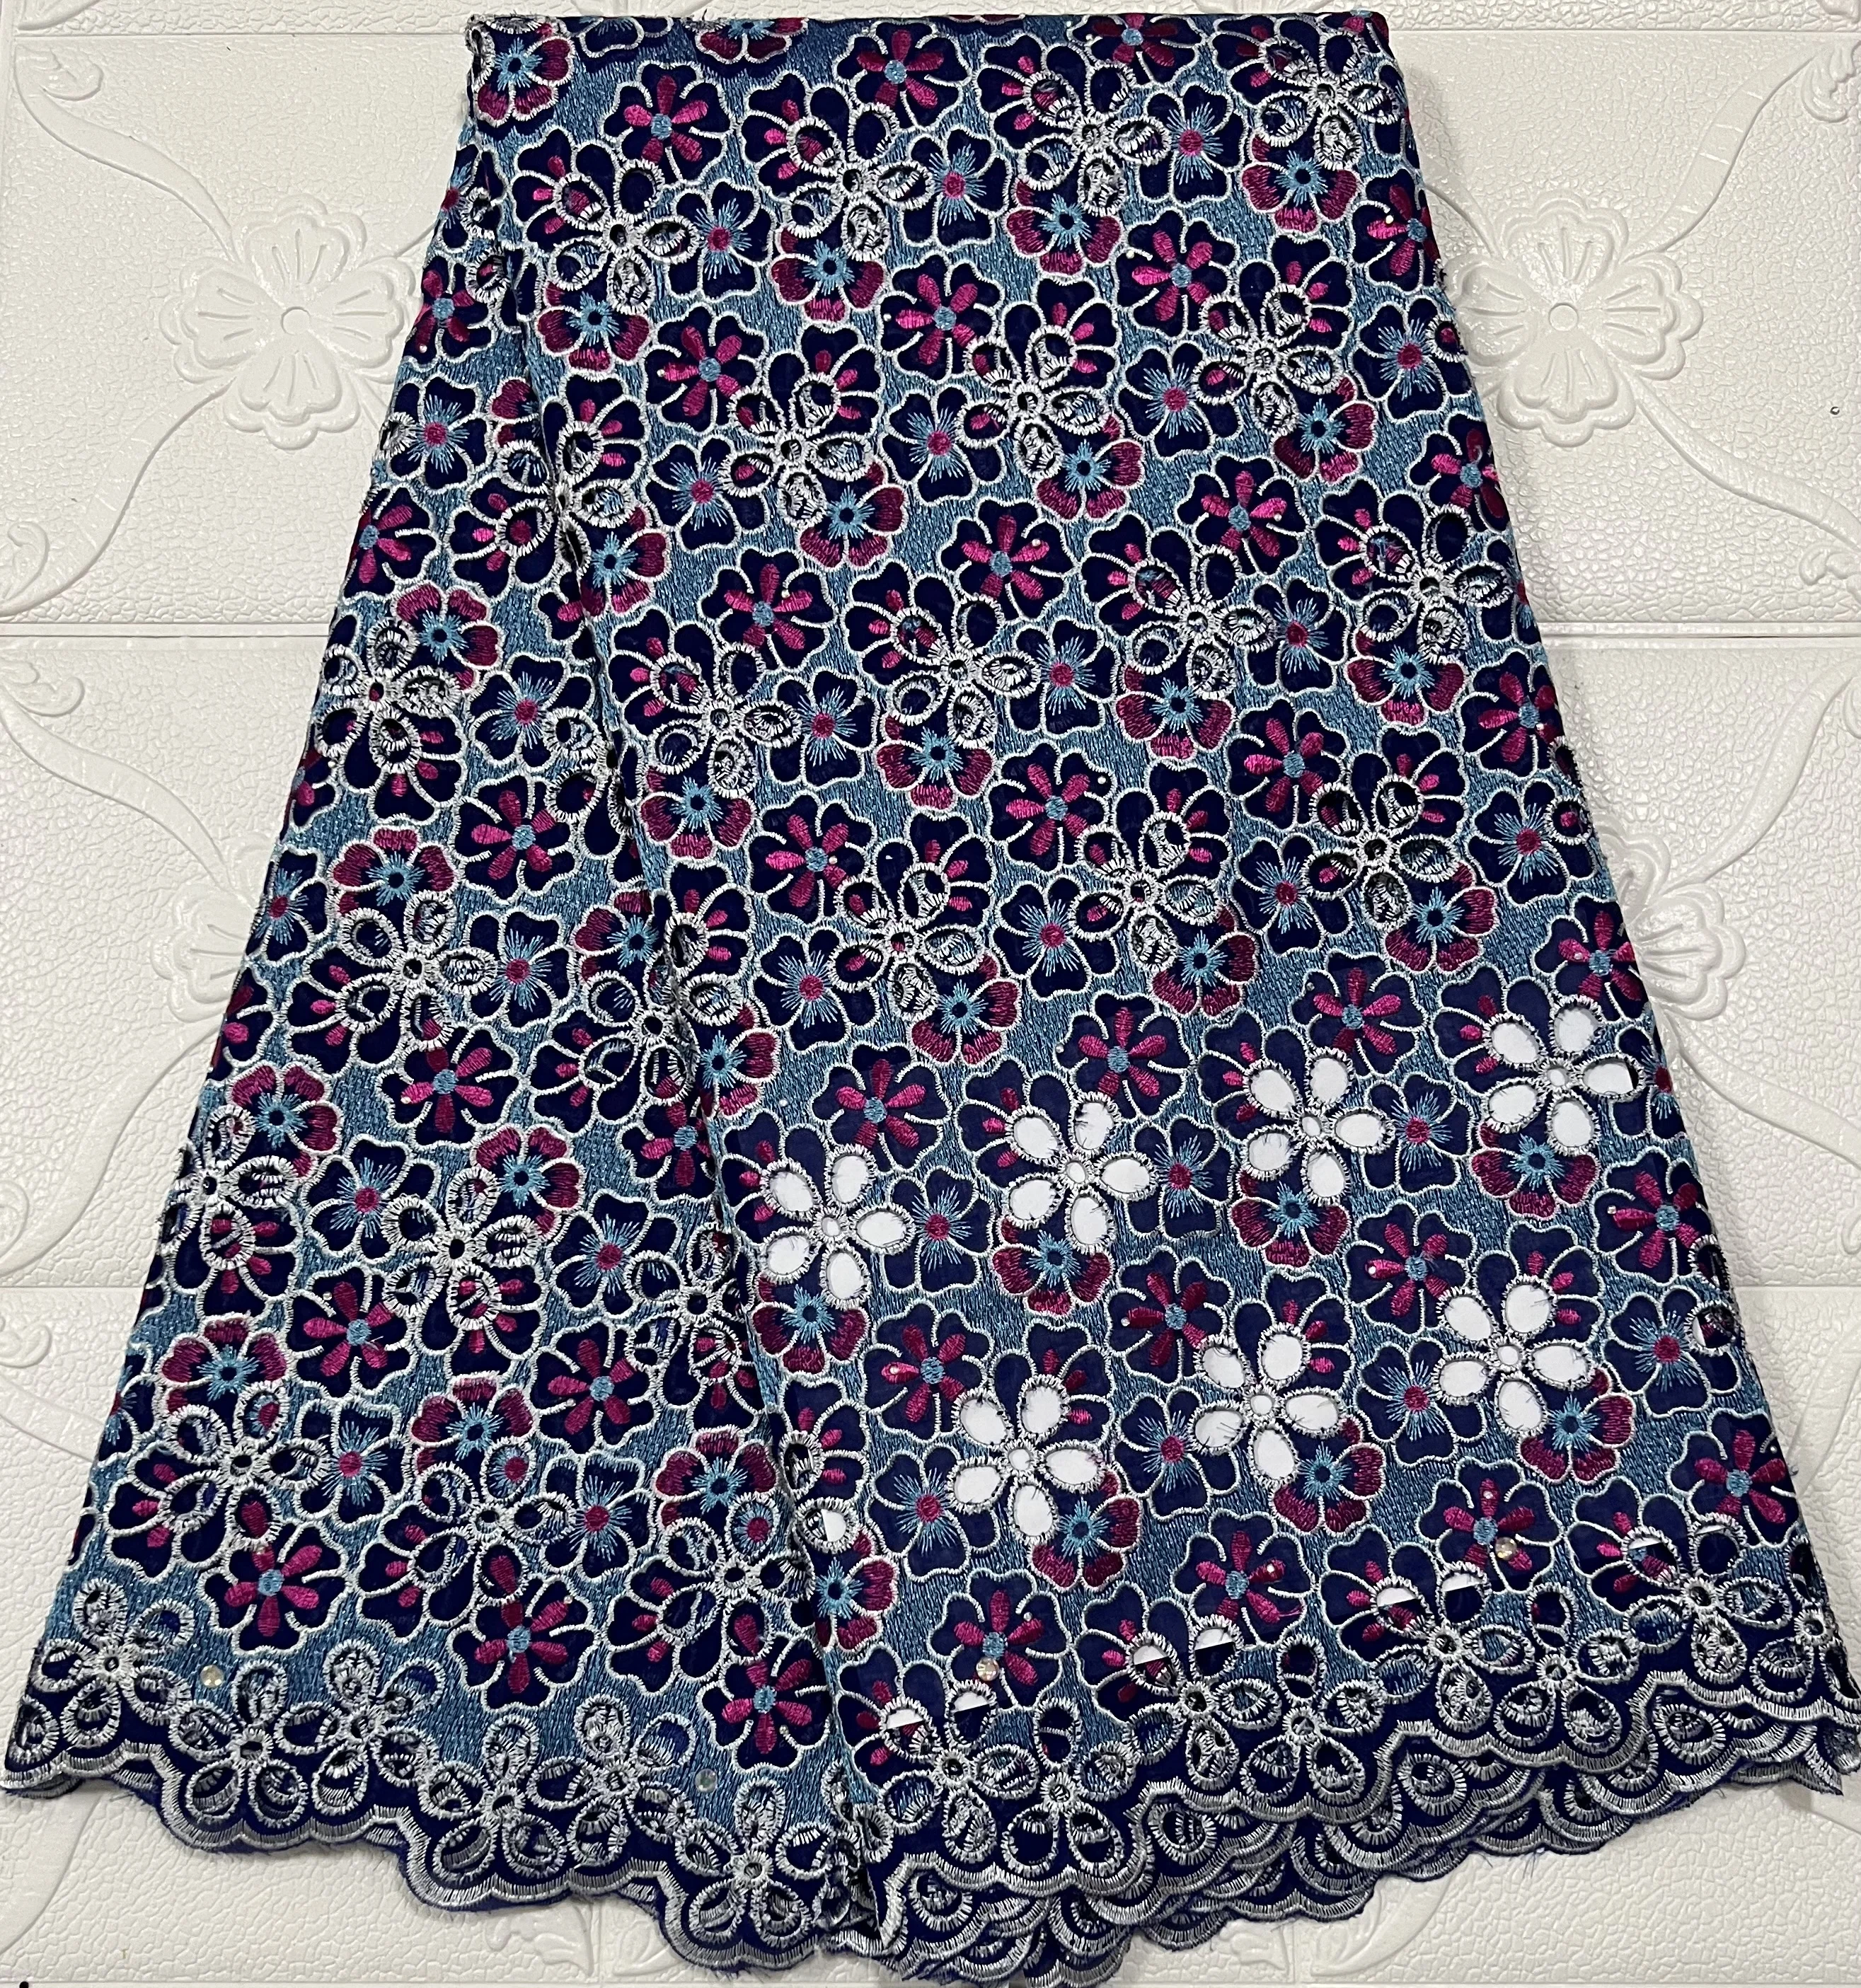 Купи Latest Classic Style African 100% Cotton Lace Fabric High Quality Swiss Voile Lace In Switzerland Dubai For Sewing Women Dress за 2,808 рублей в магазине AliExpress